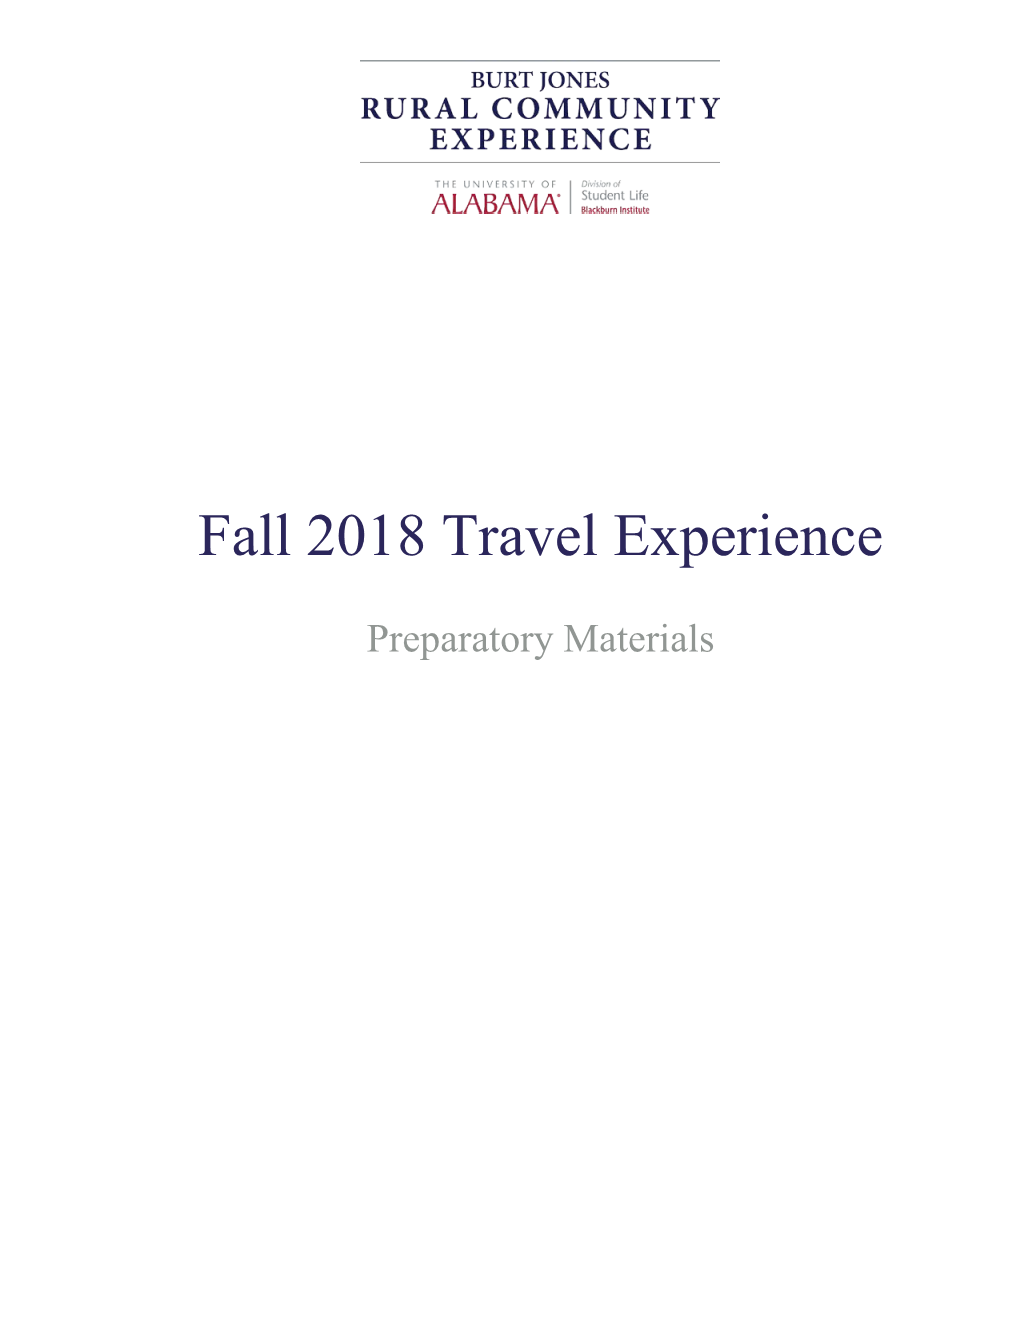 Fall 2018 Travel Experience